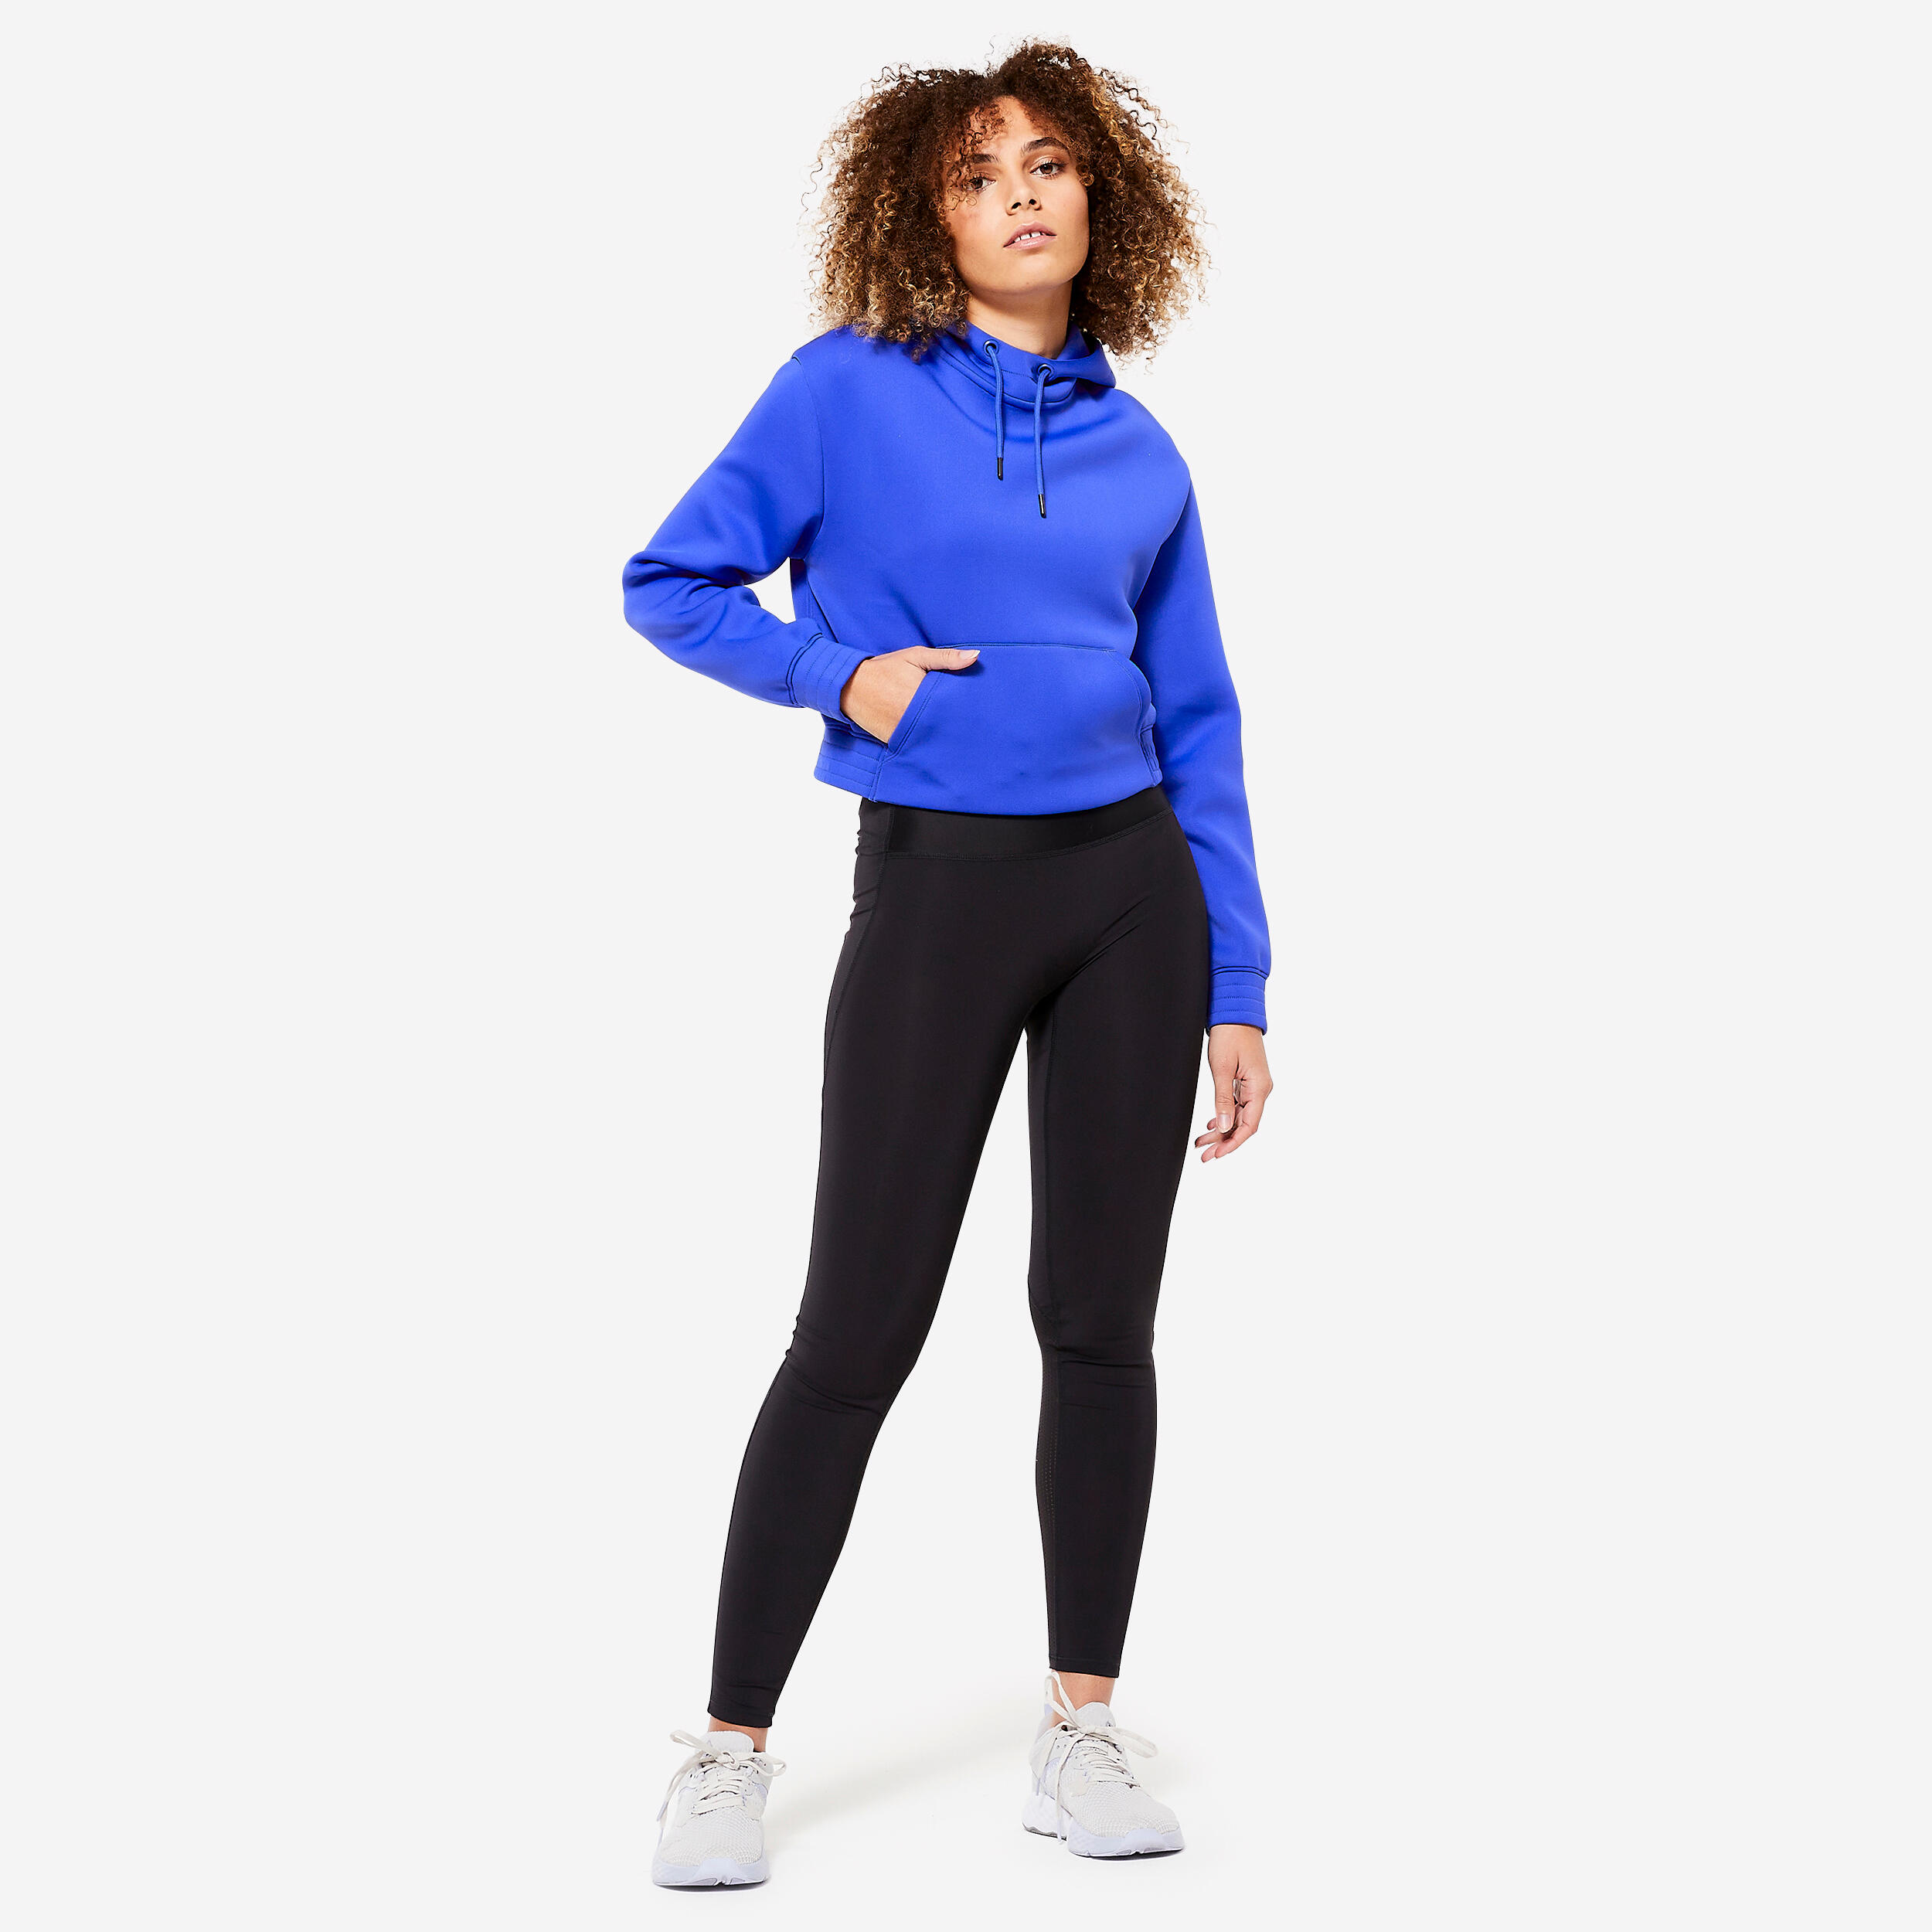 Cropped Cut Fitness Cardio Hooded Sweatshirt - Blue 2/7